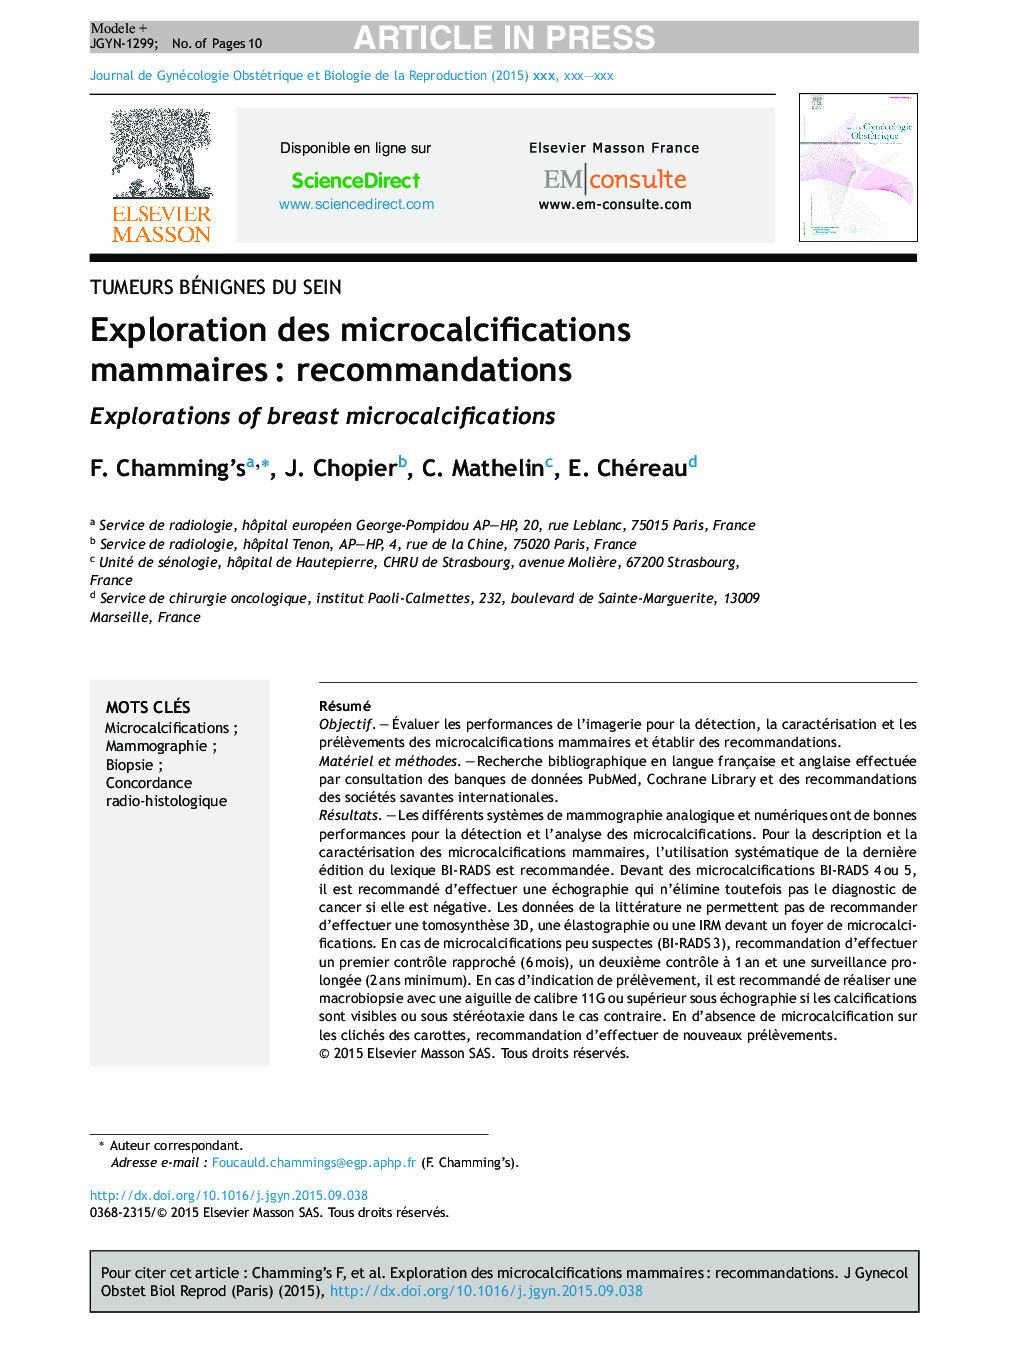 Exploration des microcalcifications mammairesÂ : recommandations